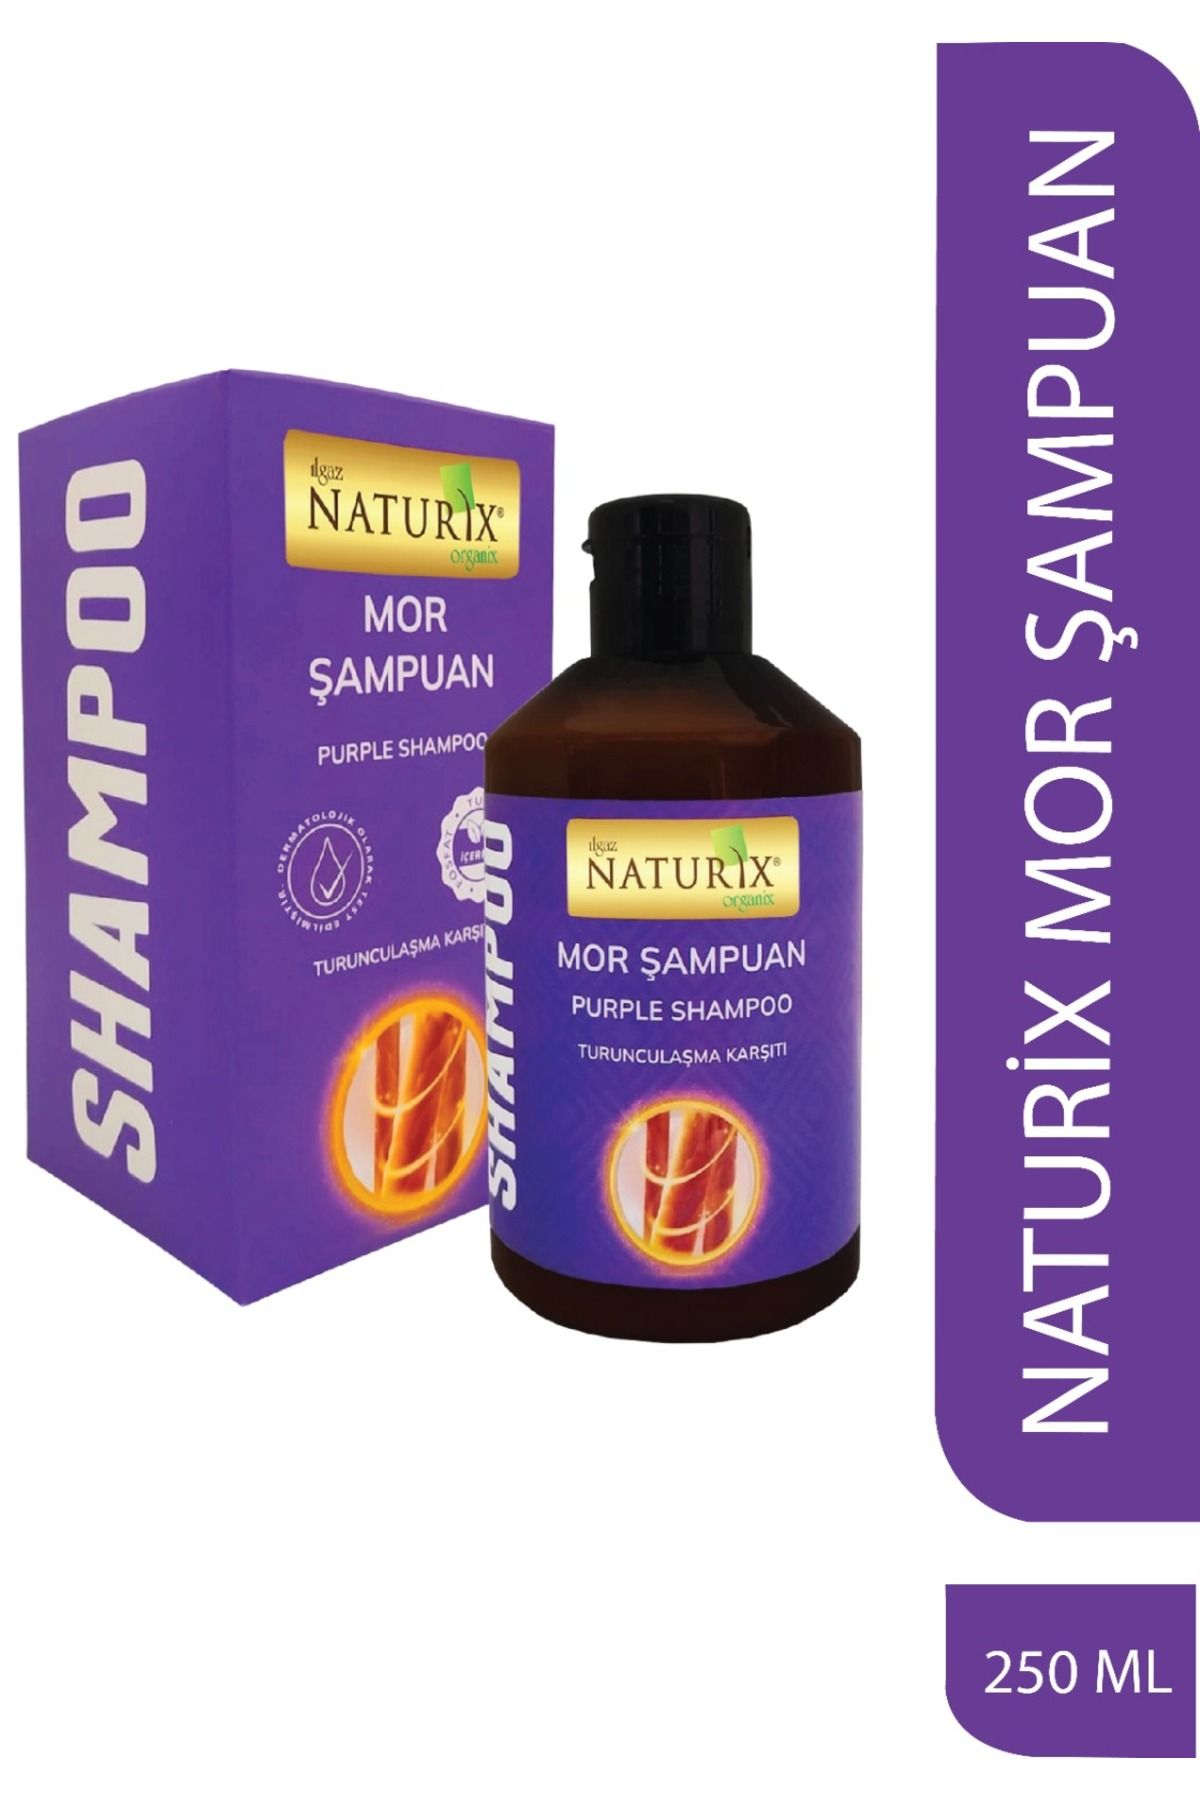 Naturix Purple / Silver Shampoo Turunculaşma Karşıtı Tuz Pareben Fosfat Içermeyen Mor Şampuan 250 Ml